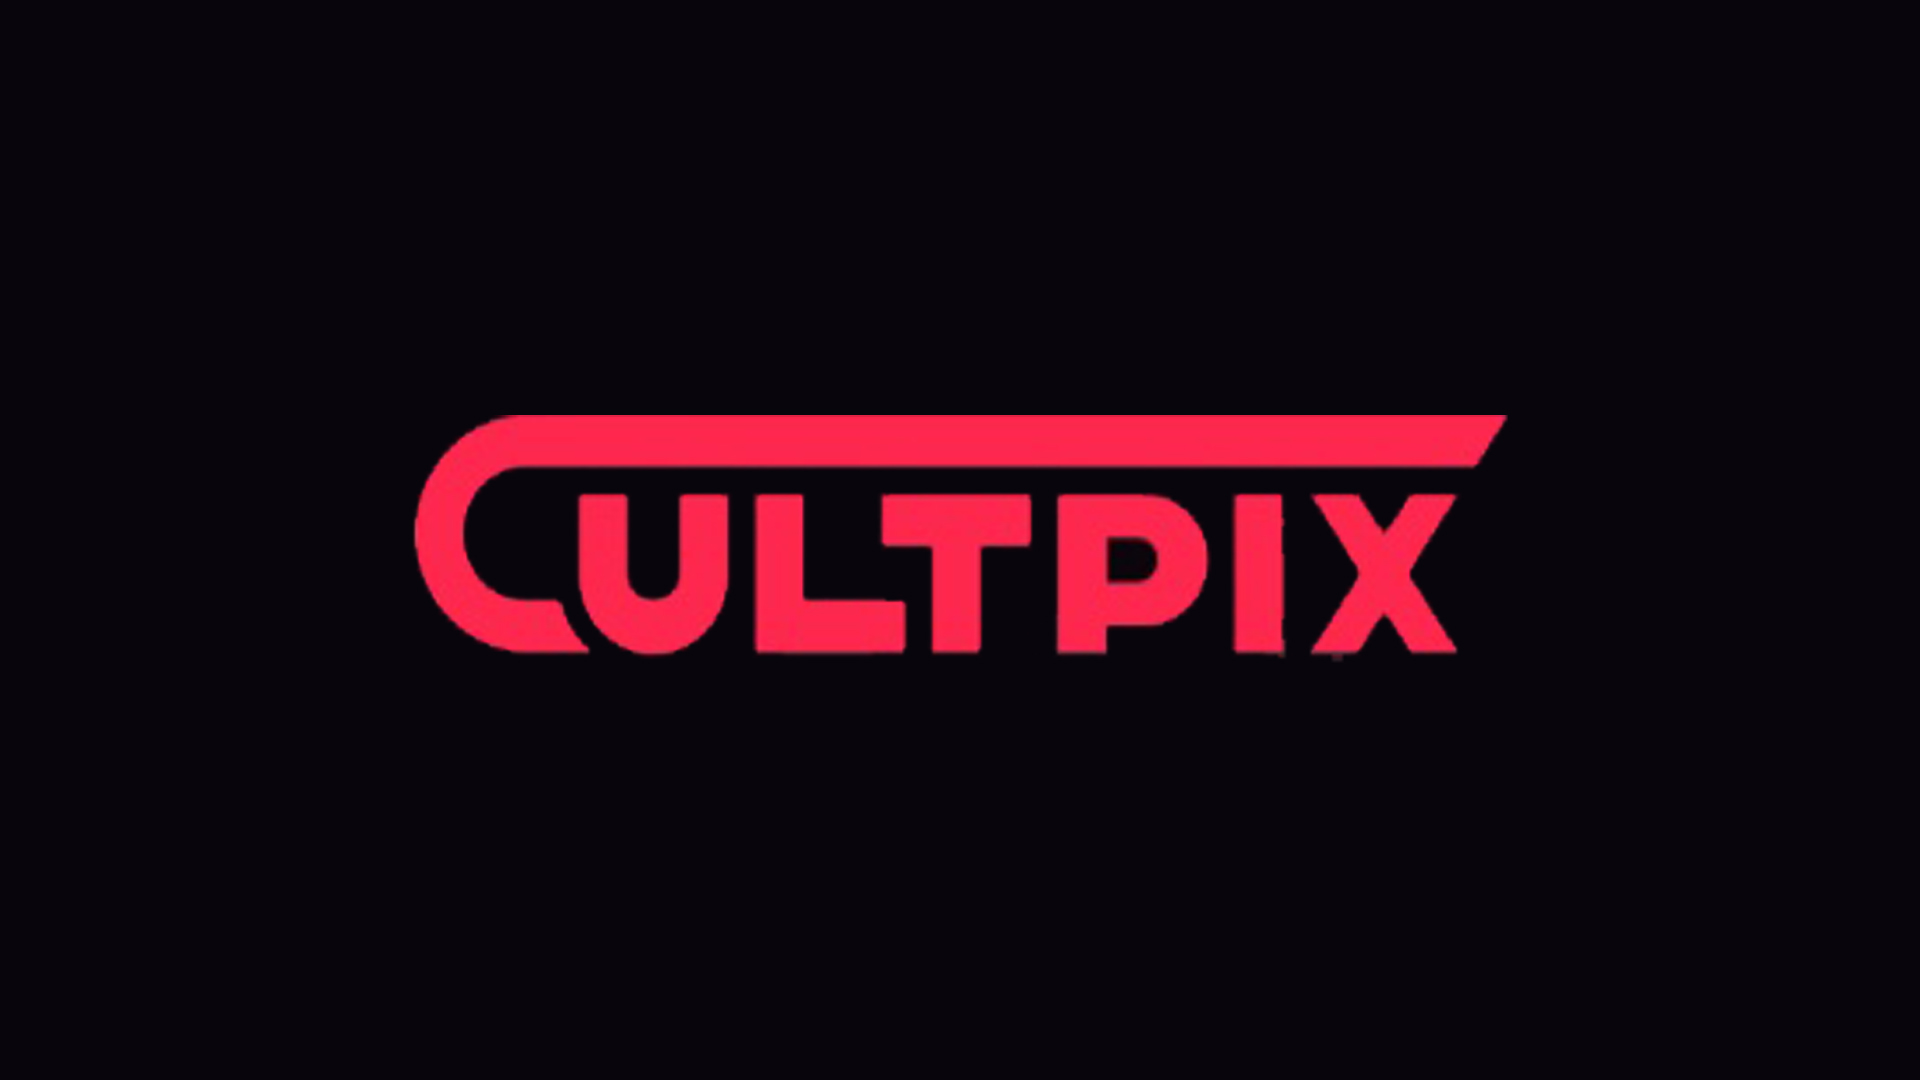 Cultpix Adalah Platform Penstriman Video Filem-Filem Klasik Dan Kultus